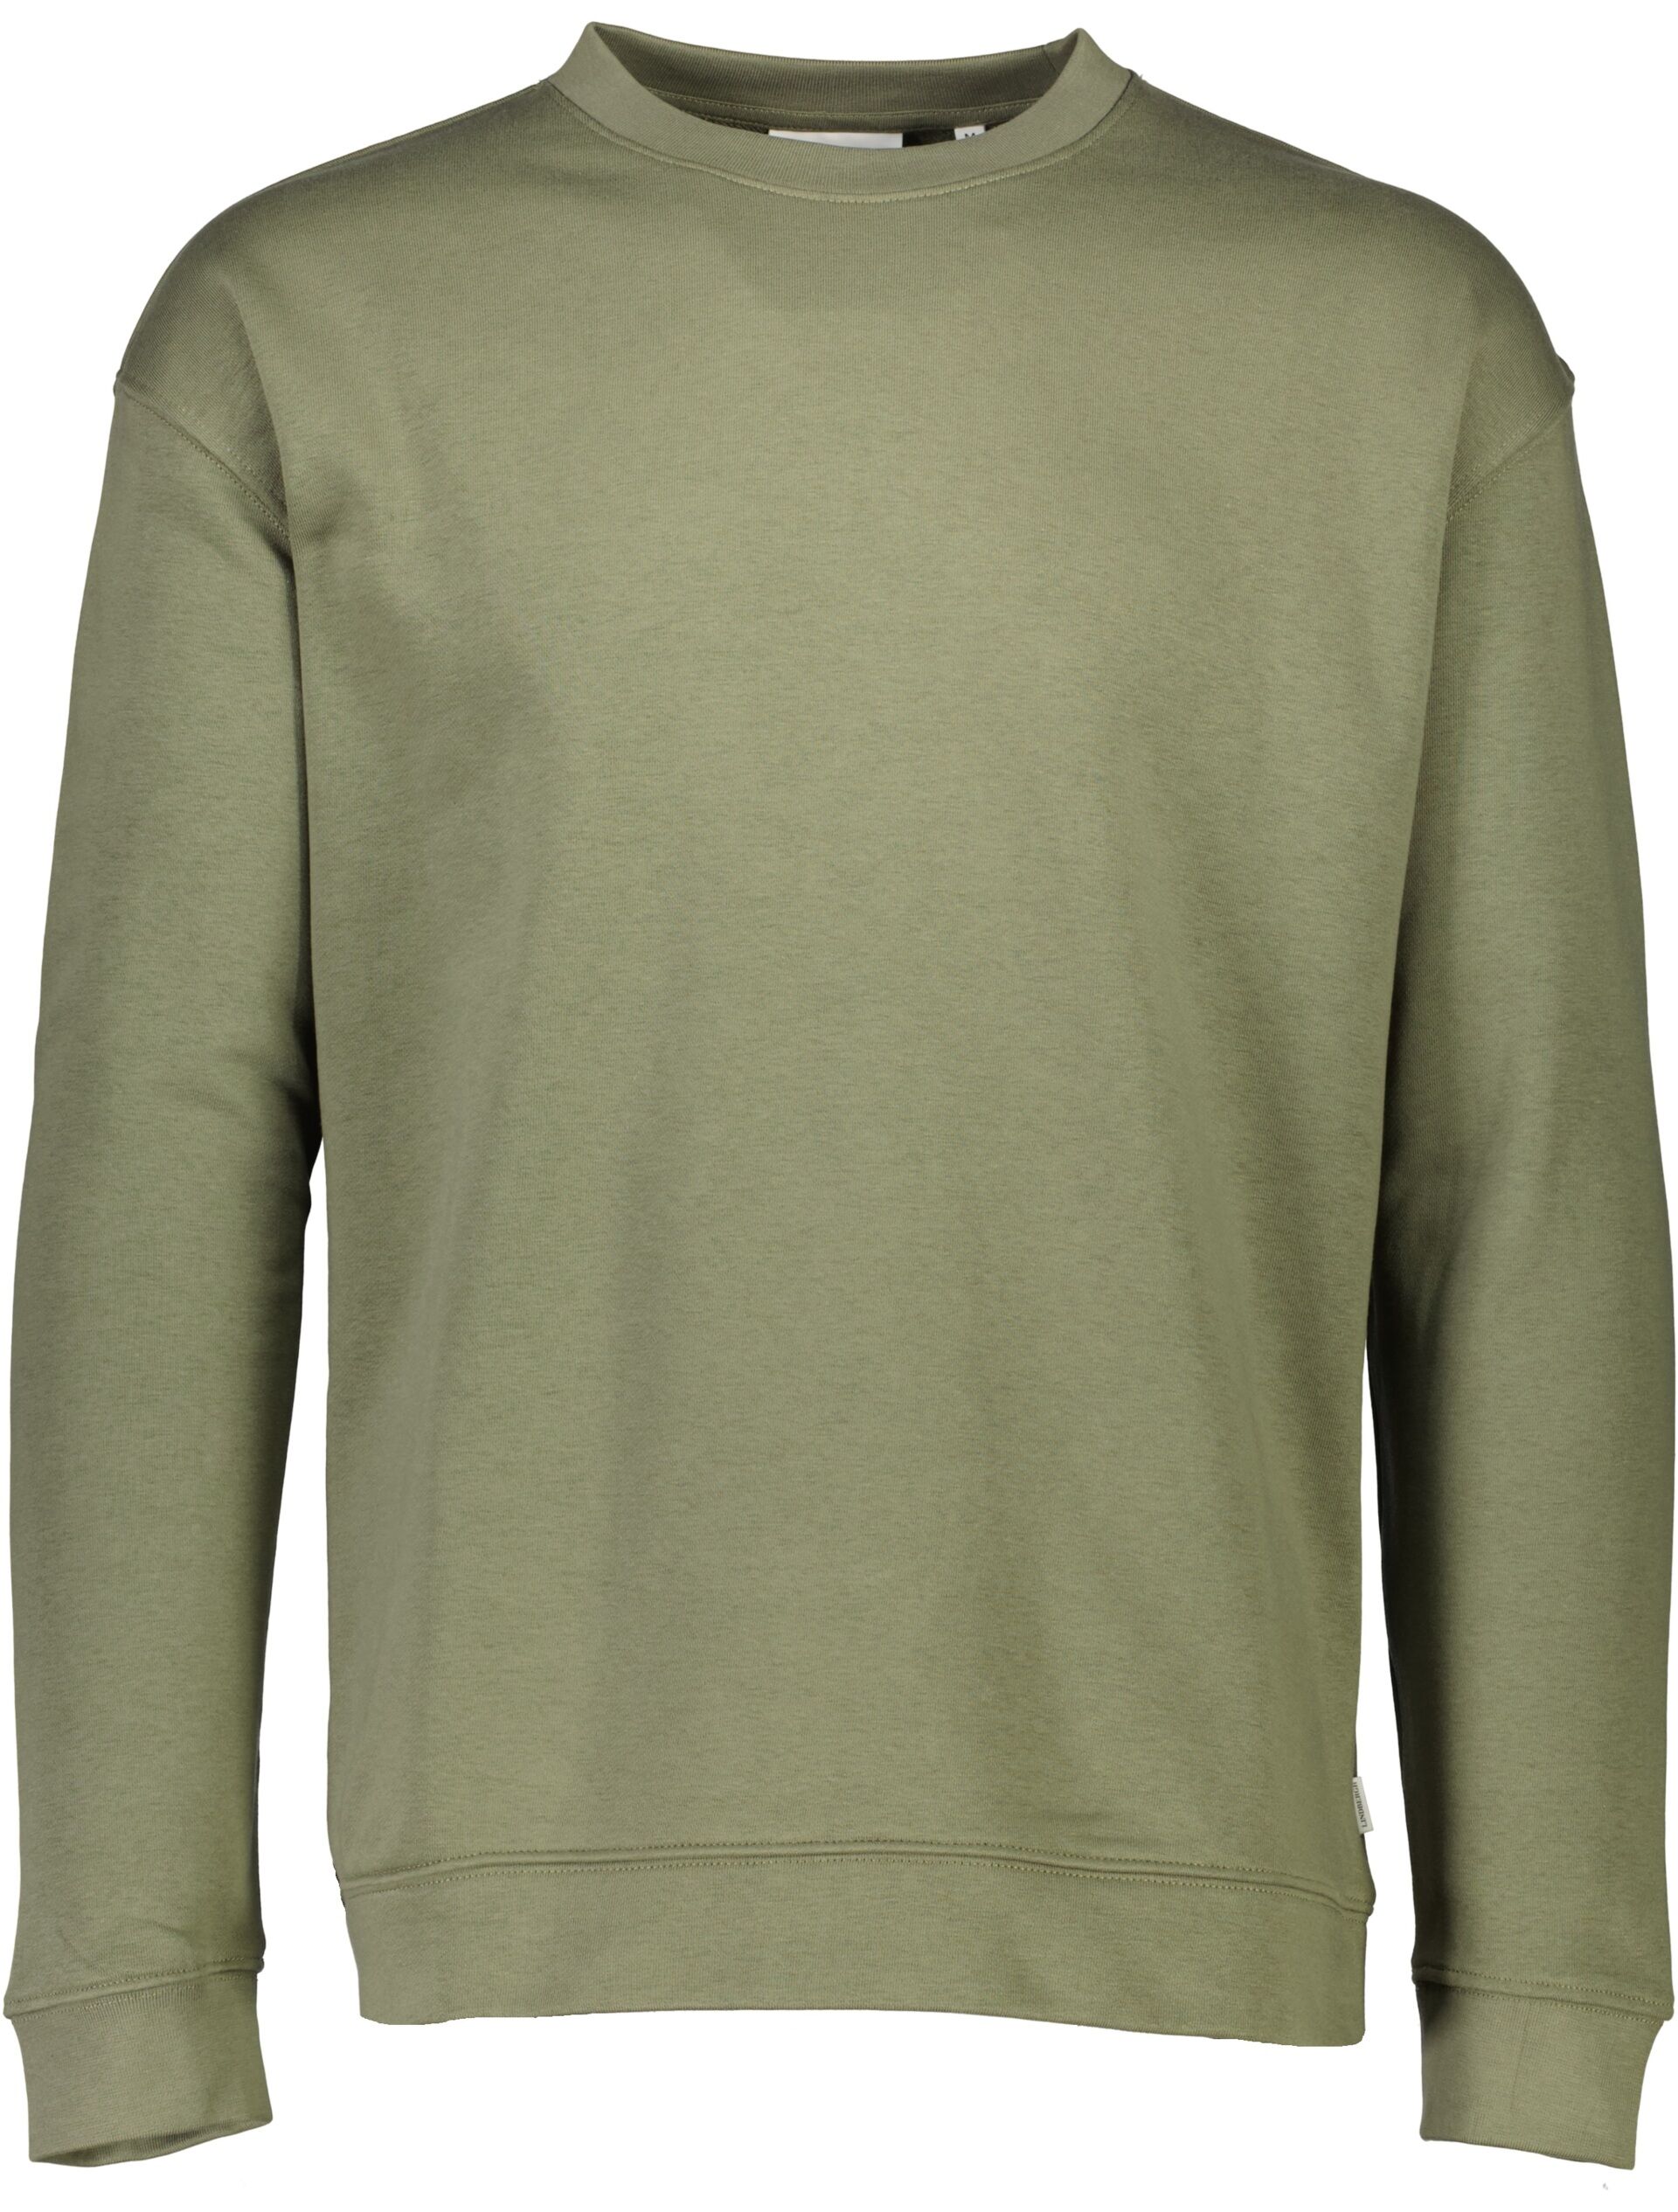 Sweater Sweater Groen 30-705150A